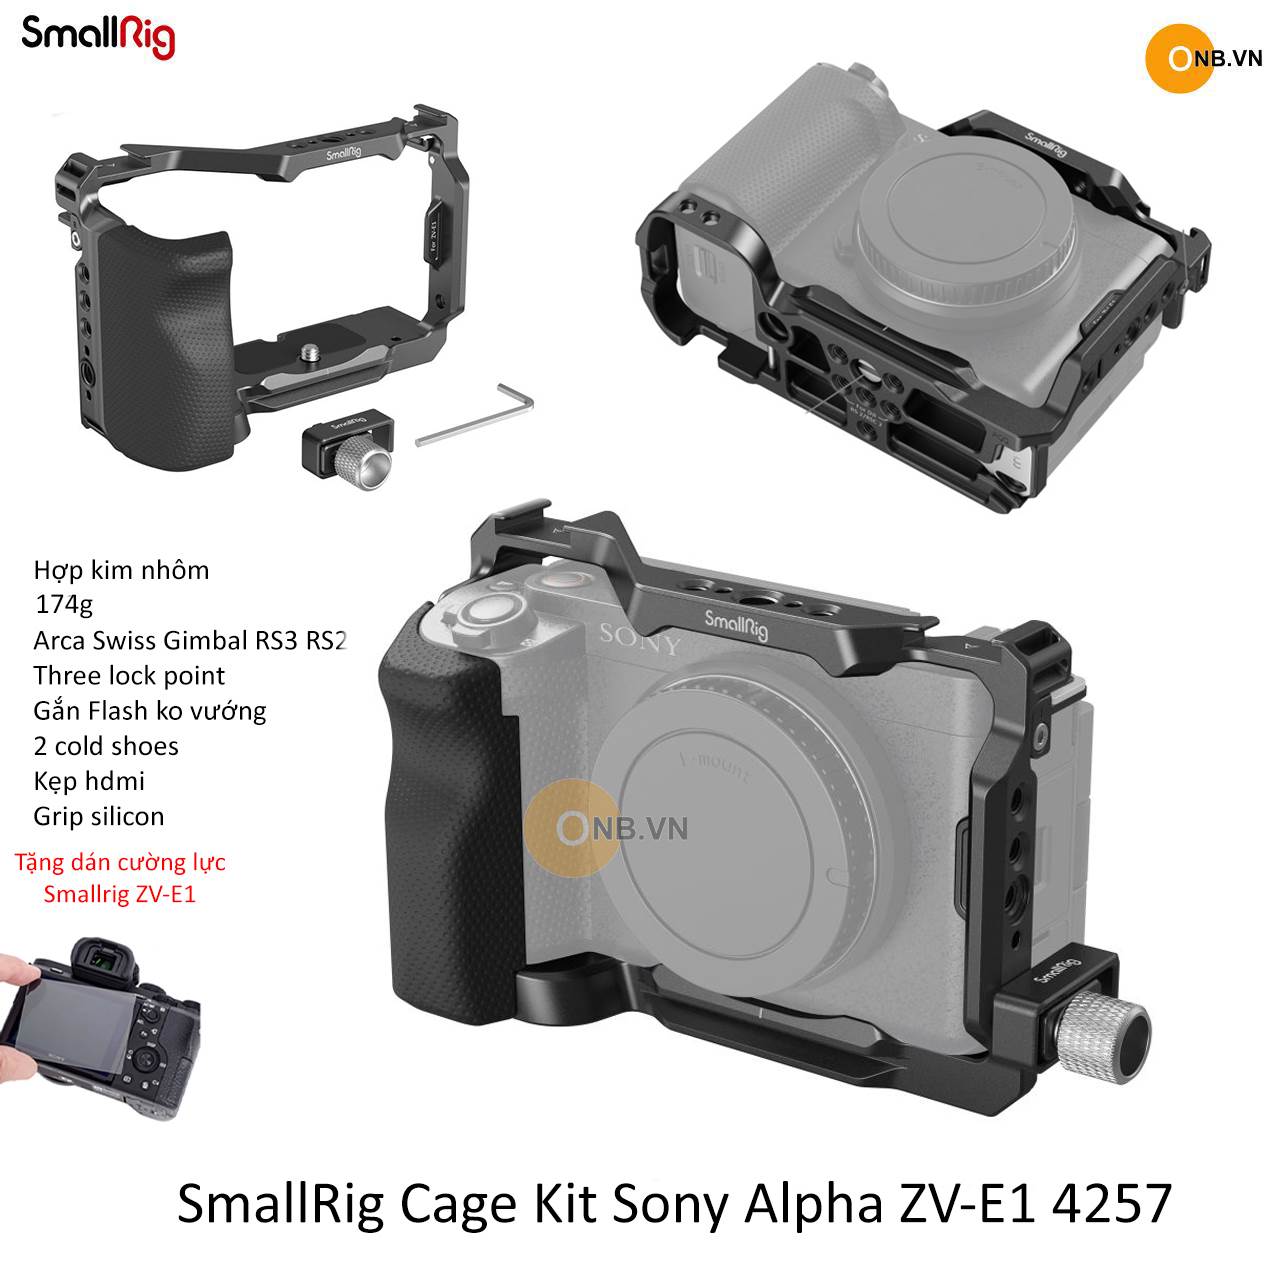 SmallRig Cage Kit Sony Alpha ZV-E1 4257